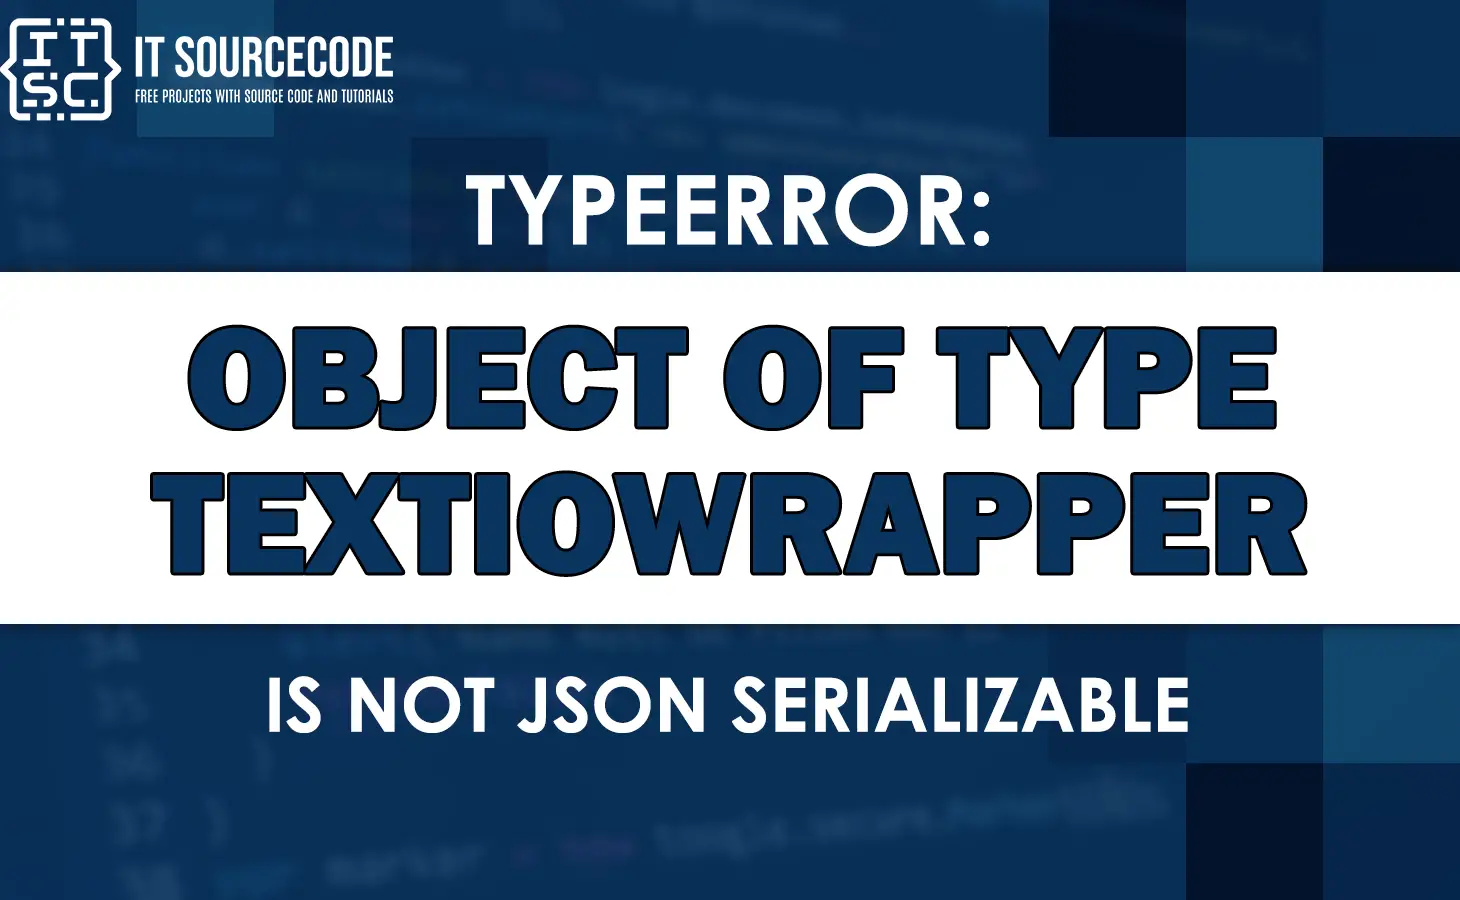 Typeerror: object of type textiowrapper is not json serializable